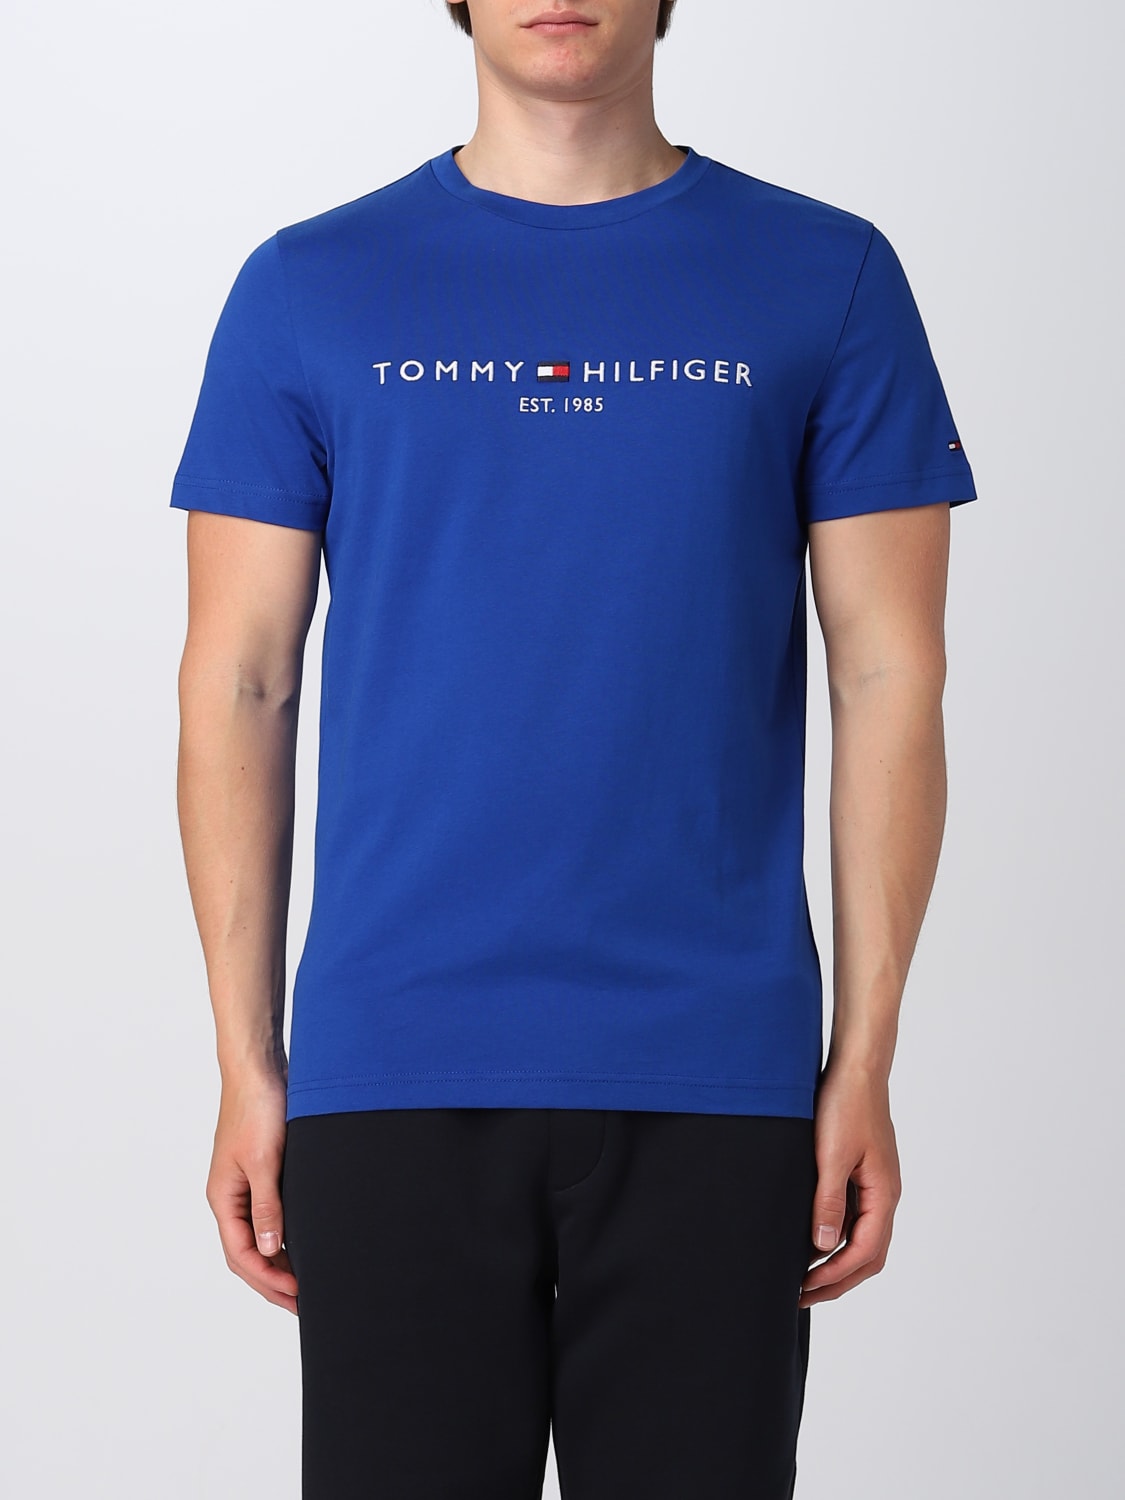 Tommy Hilfiger Mens Classic Fit Crew Neck T-Shirt (Small, Black